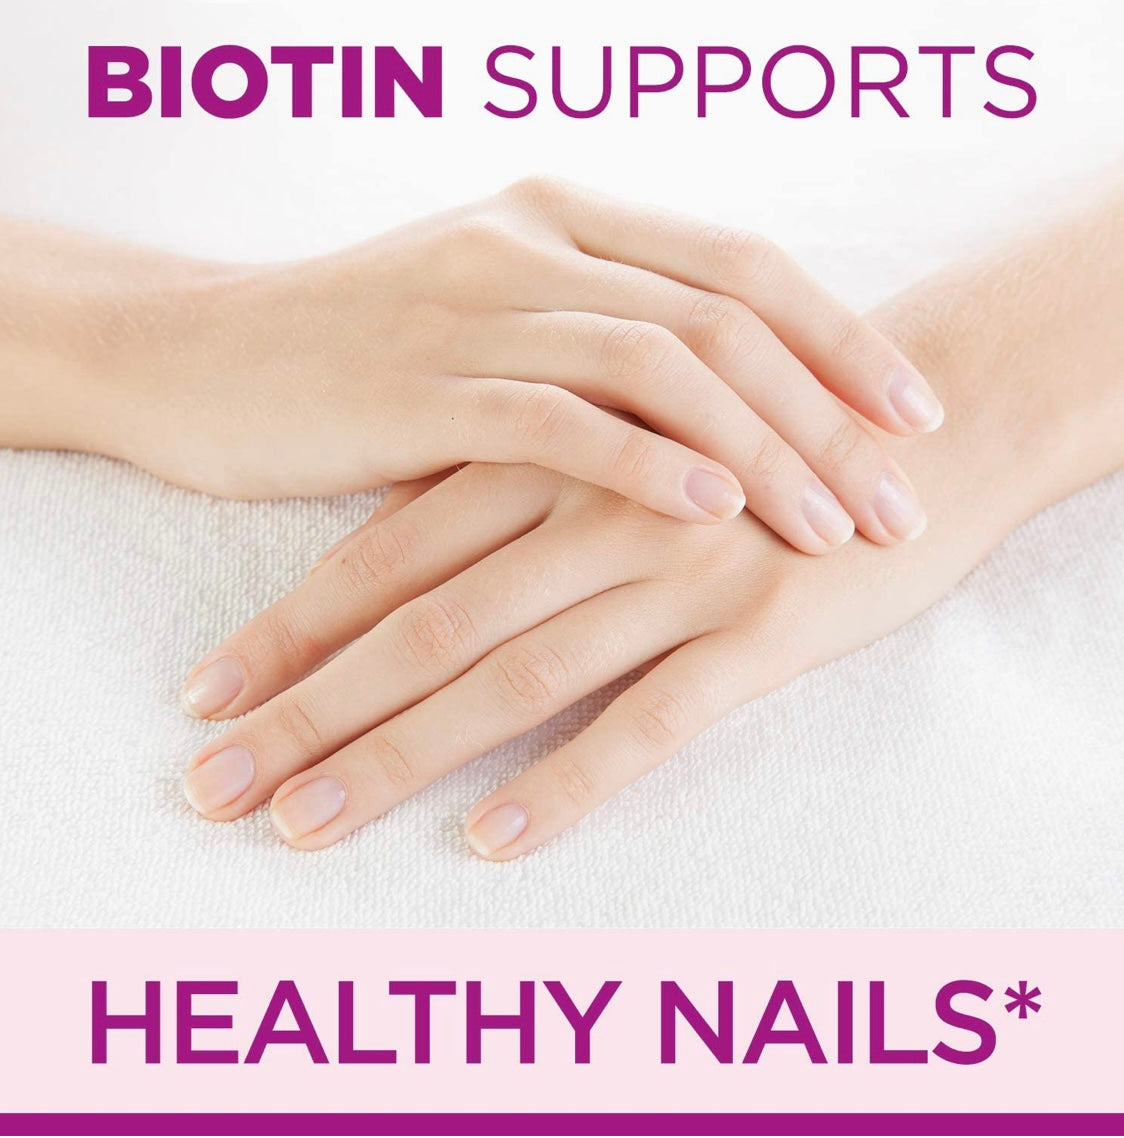 Nature’s Bounty Hair, Skin & Nails 90 Gummies Biotin